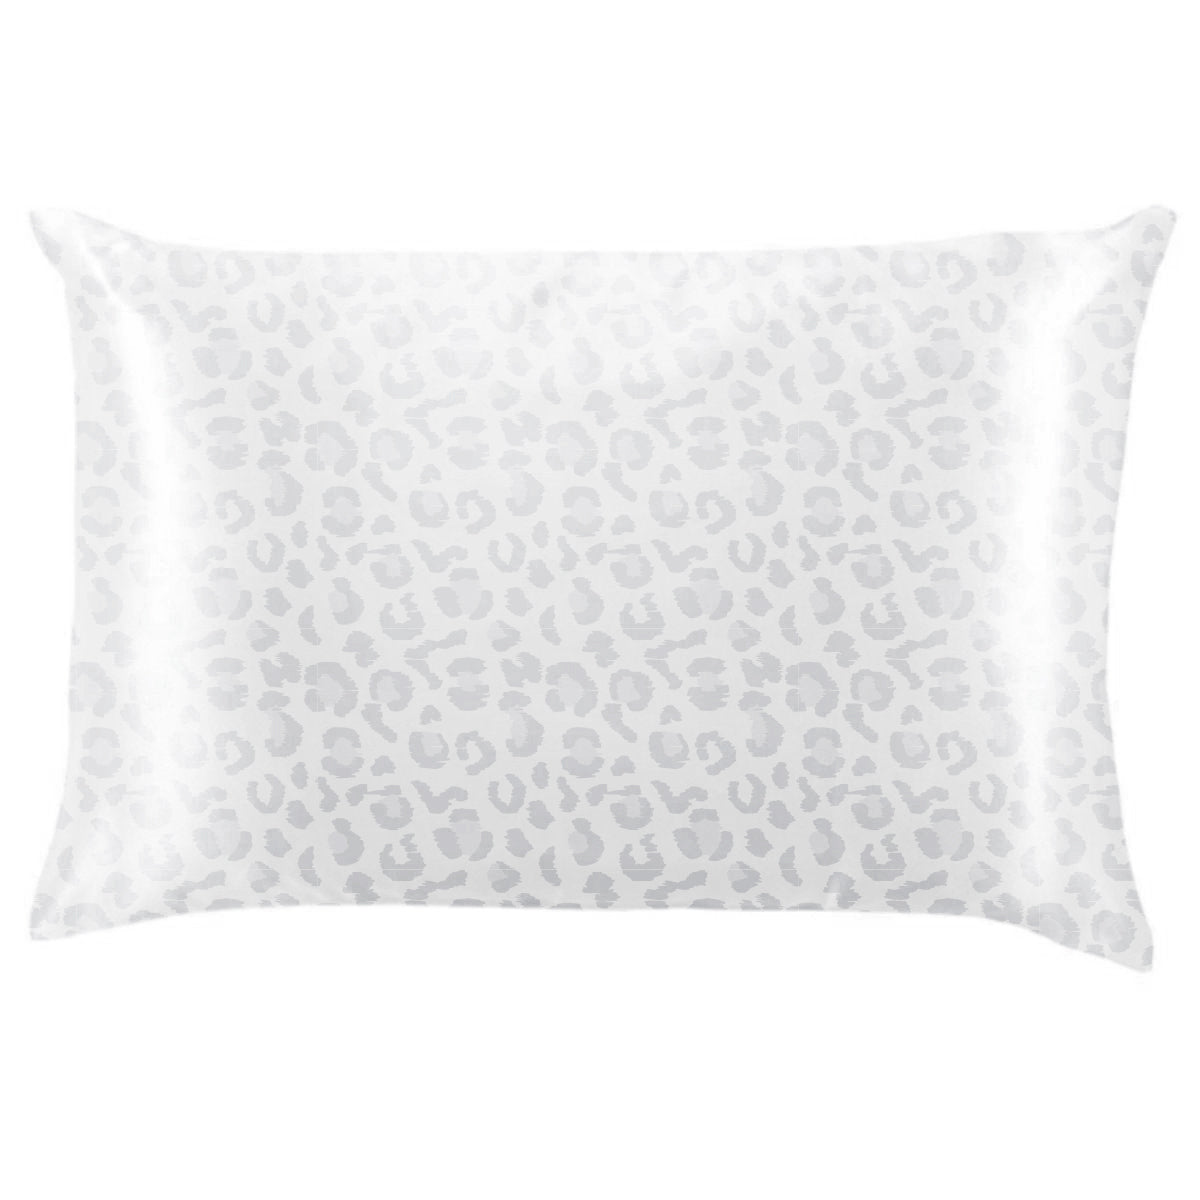 Lemon Lavender Silky Satin Pillowcase | Pattern Cat Nap | Phoenix Nationale